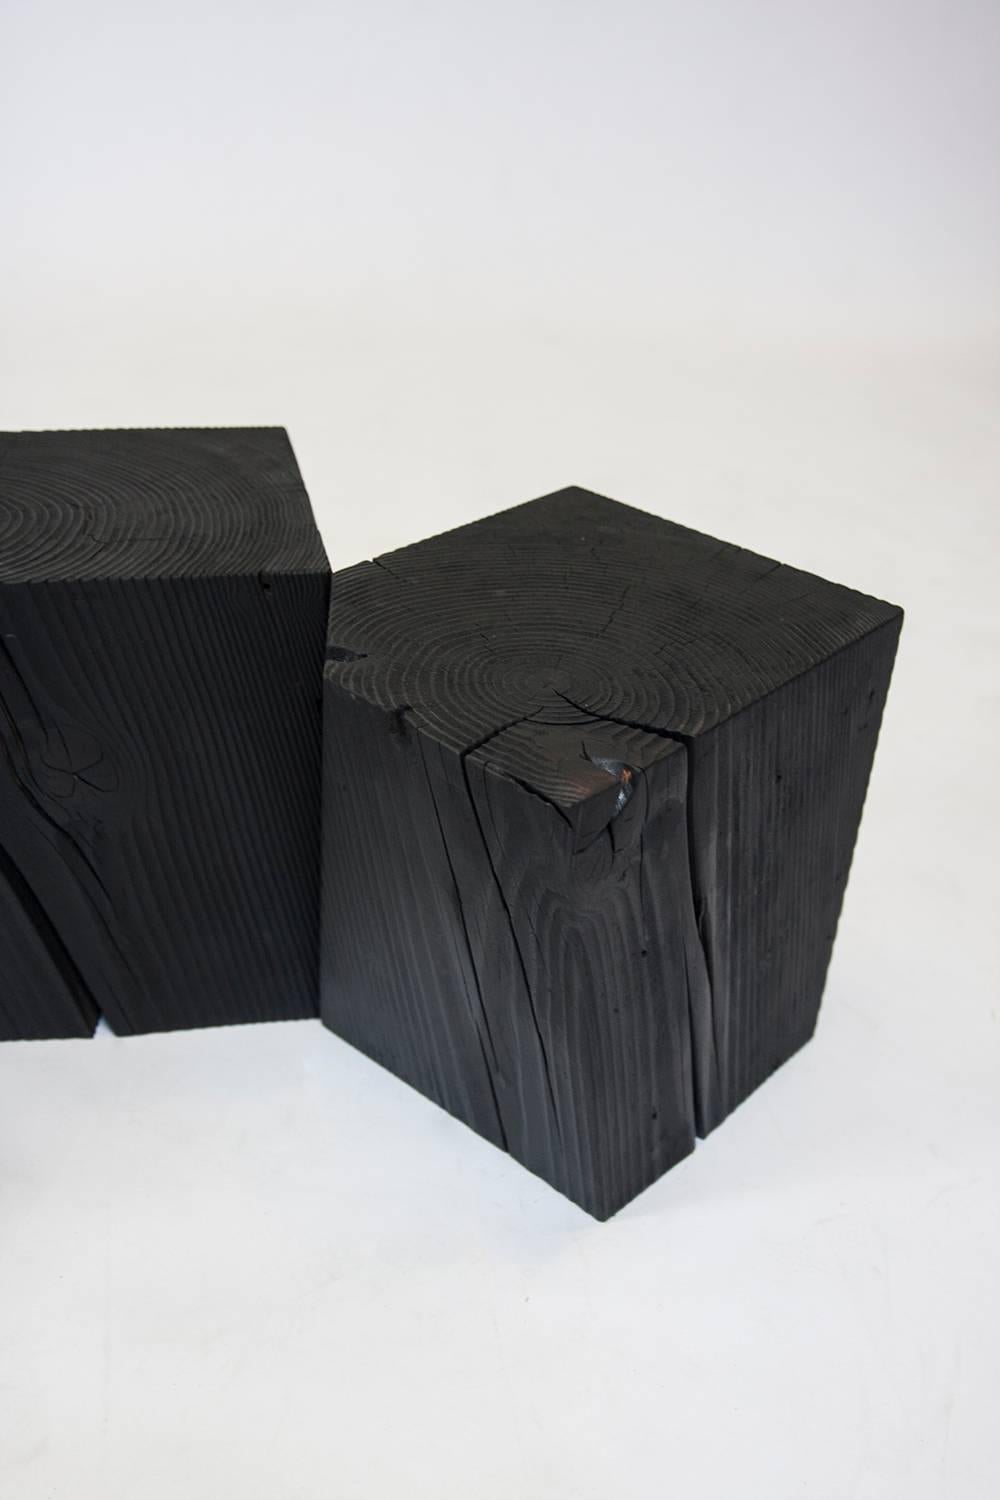 Customization for Sarah, Charcoal Blocks, Sculptural, Geometric, Tables 2